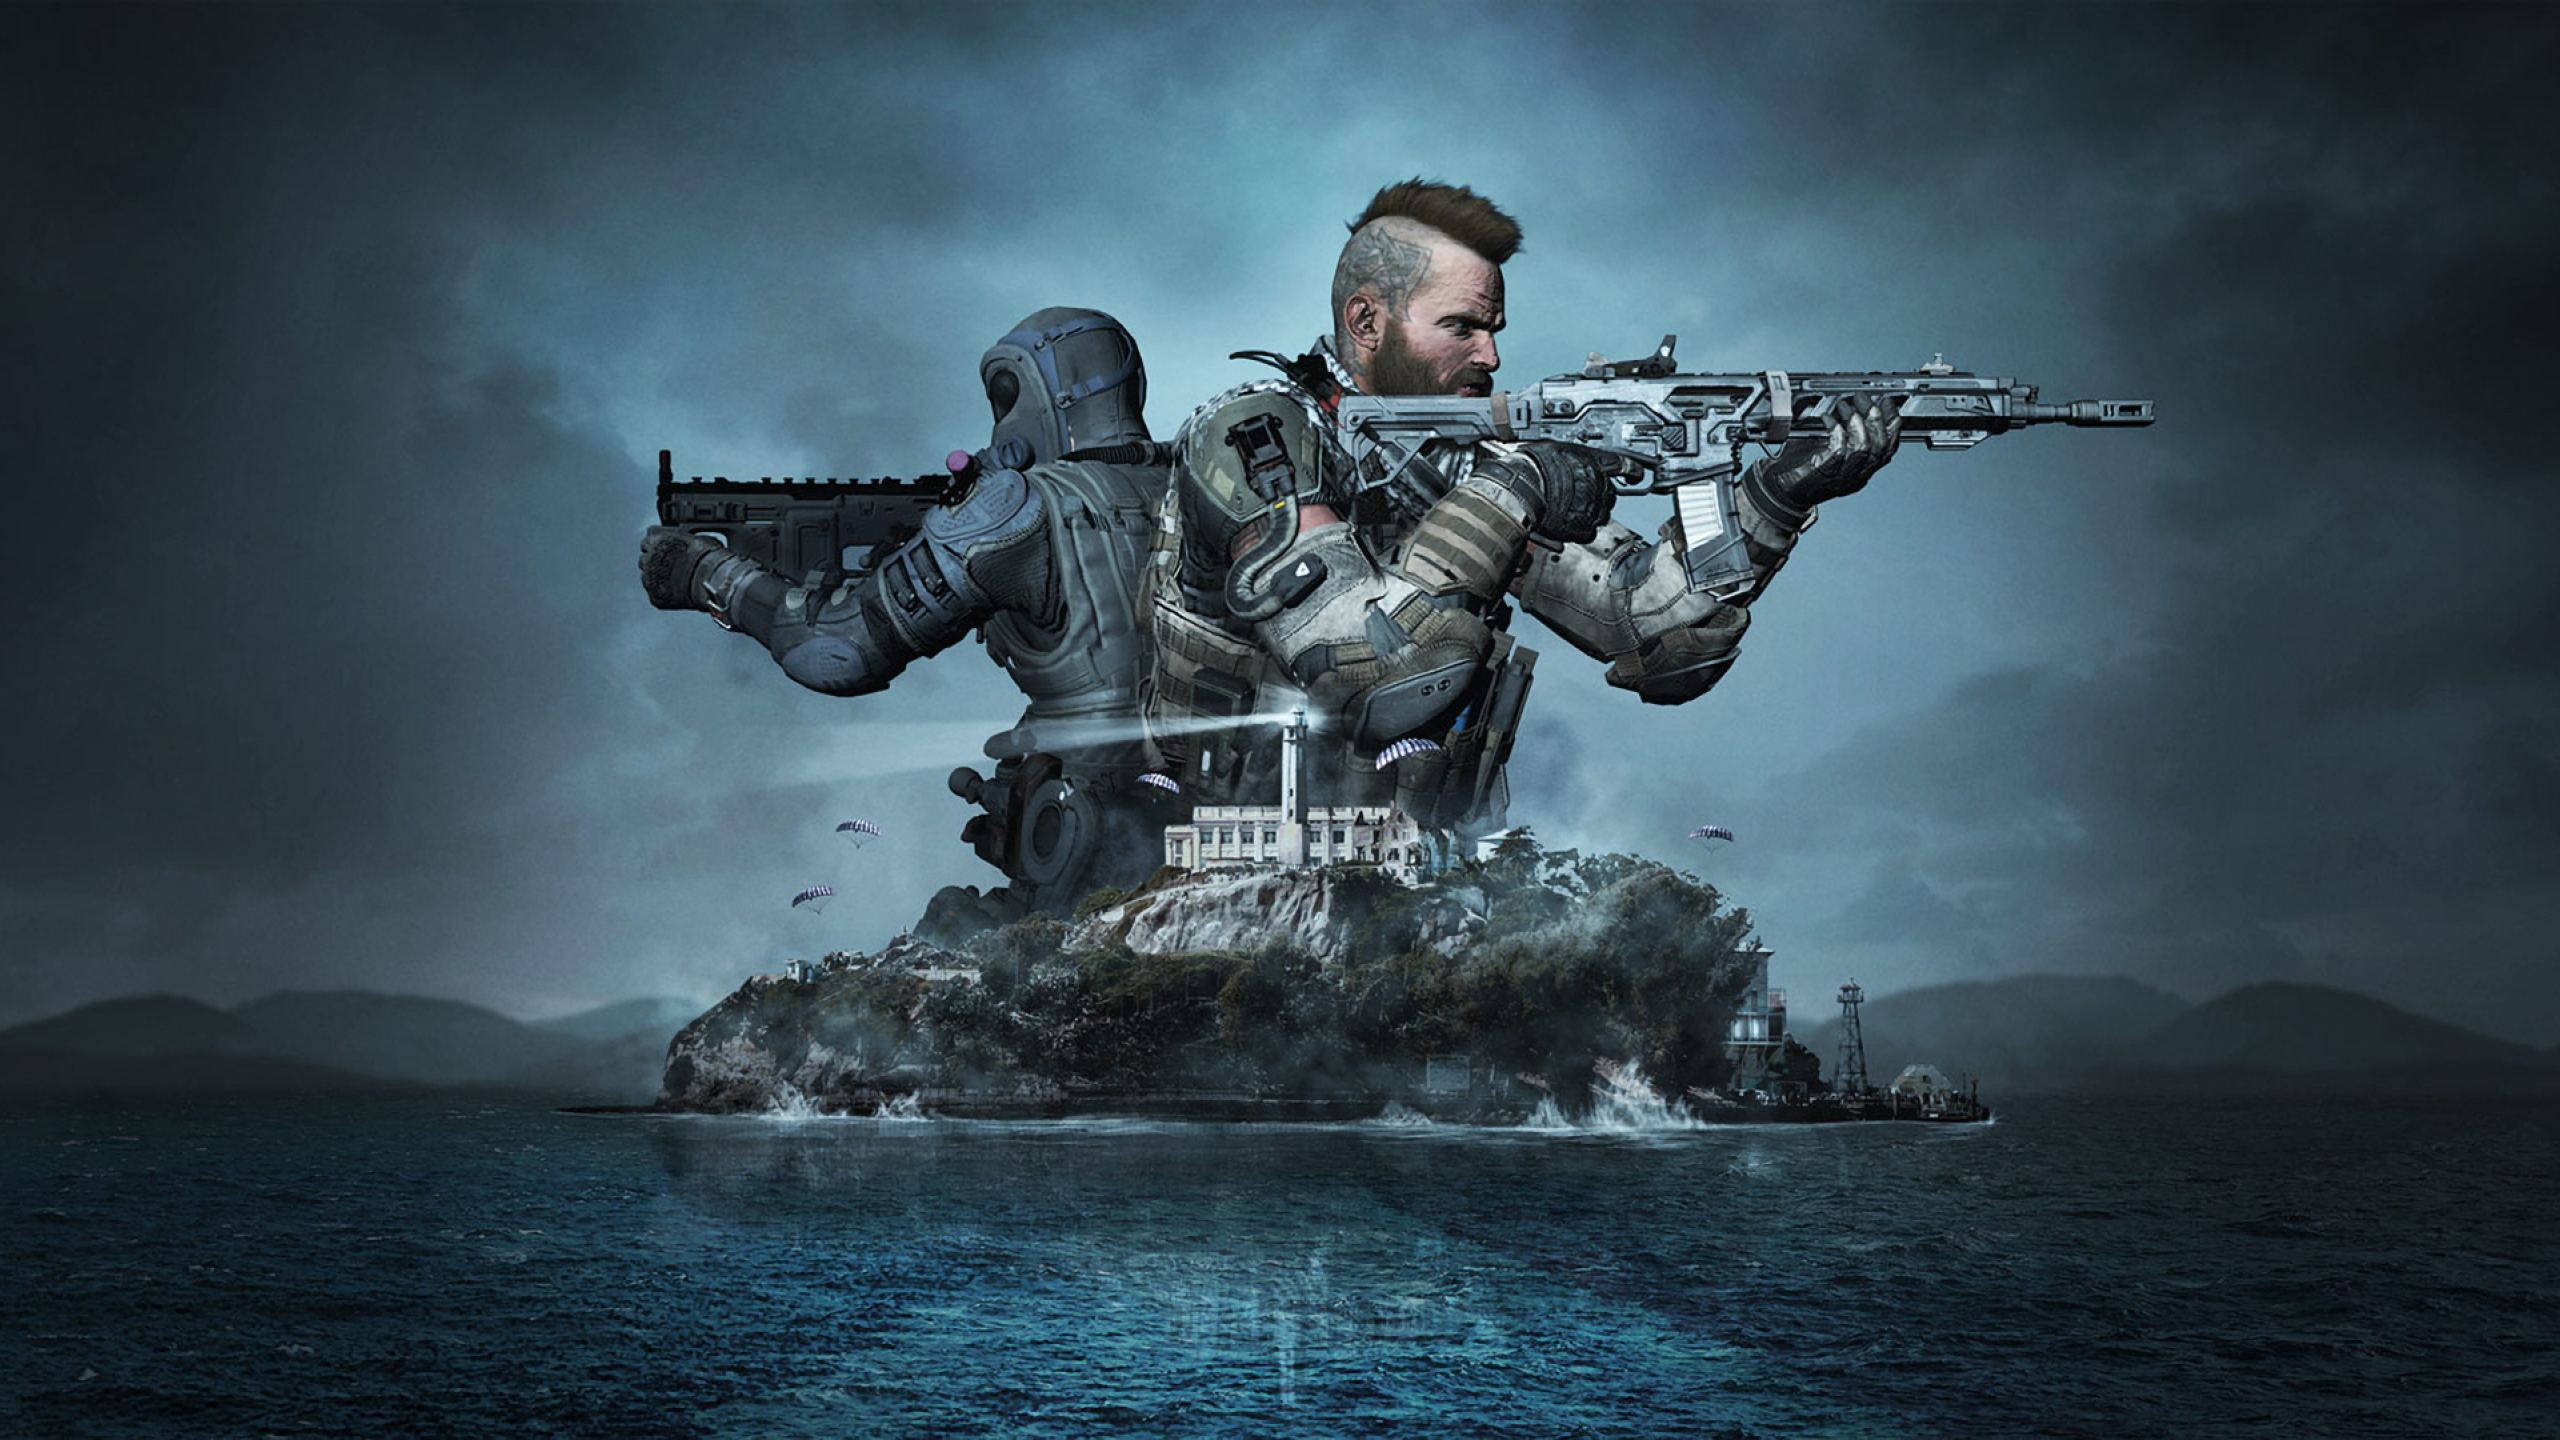 Transition in Modern Warfare Gameplay: MW2 to MW3